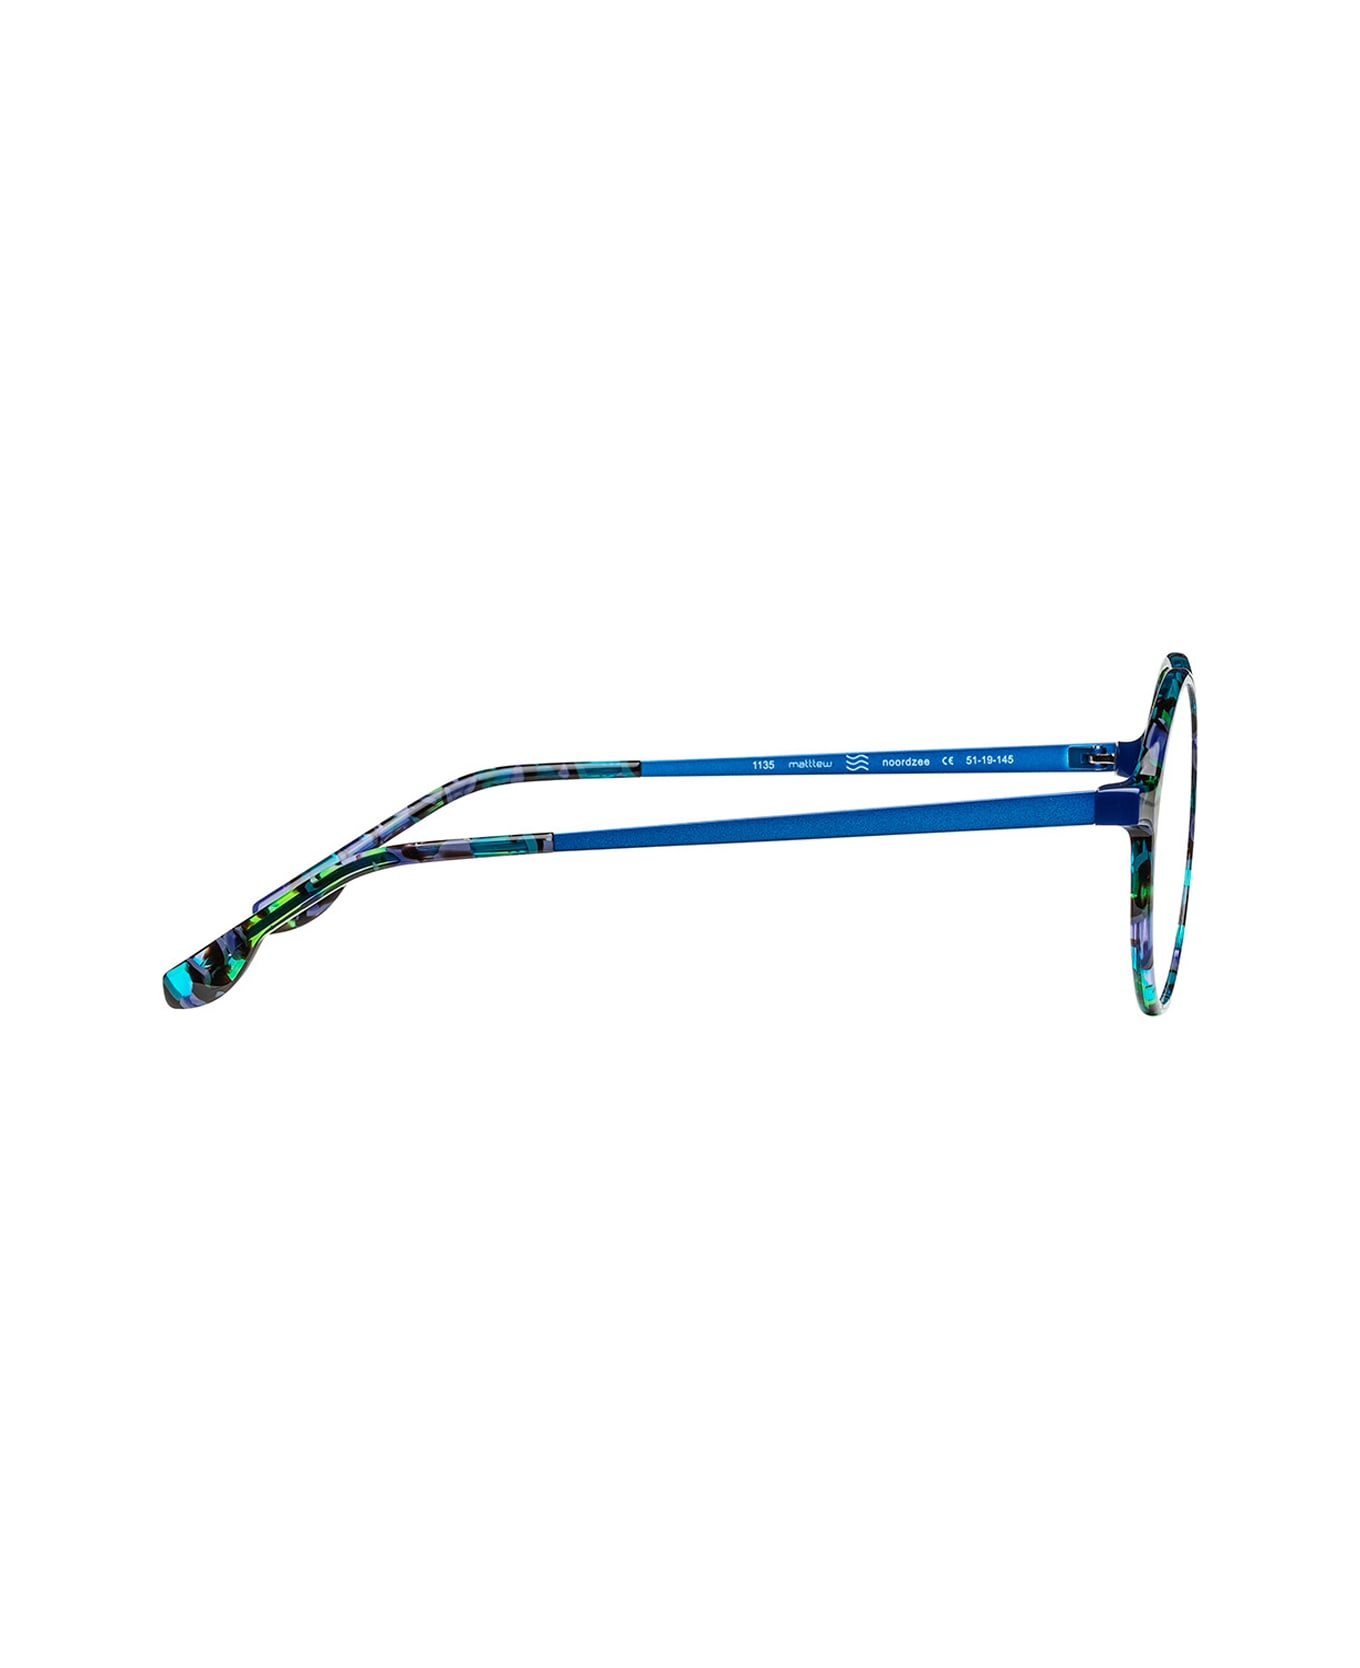 Matttew Noordzee Glasses - Blu アイウェア